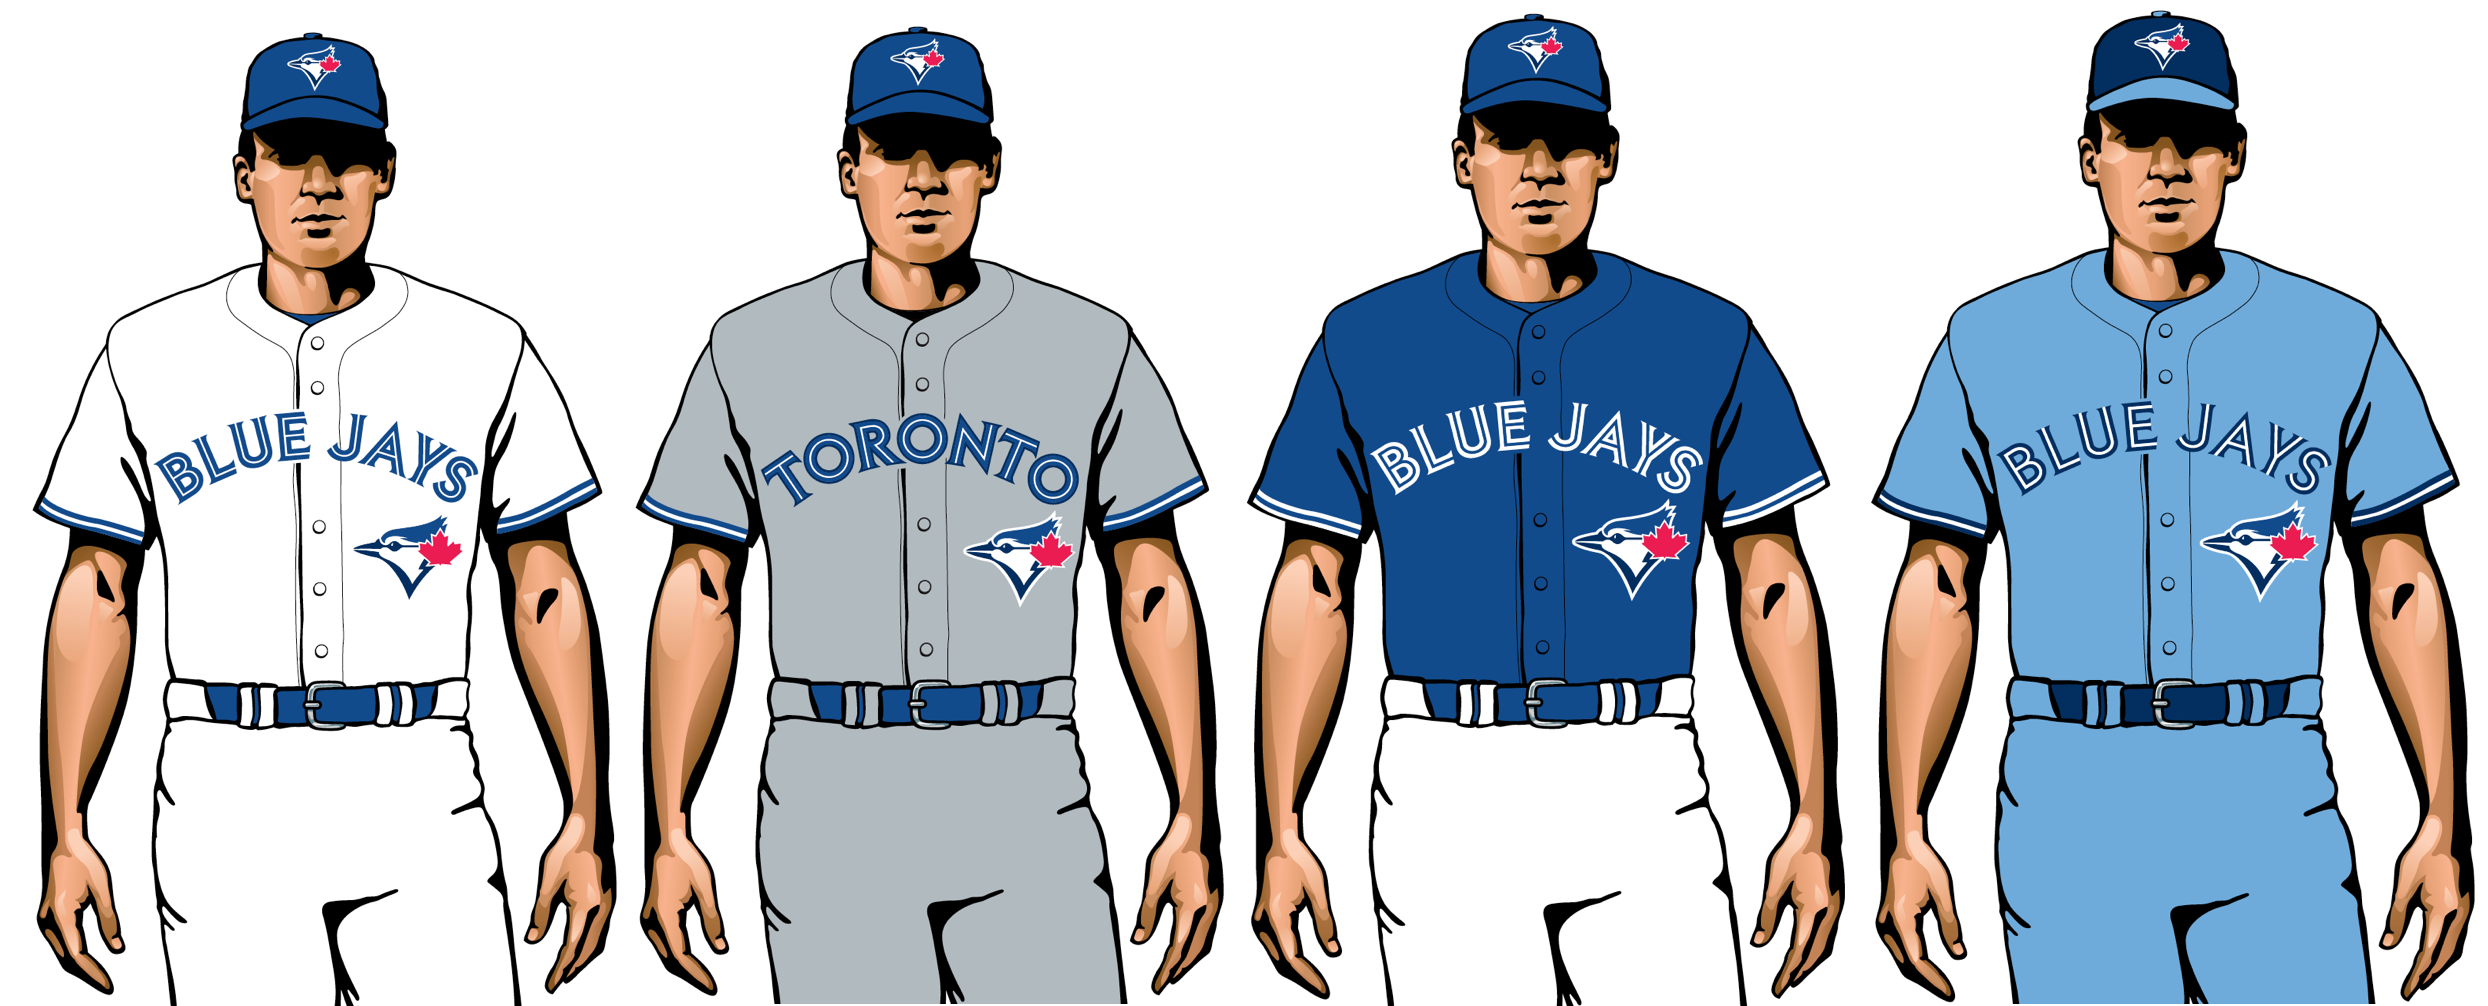 blue jays uniform 2020